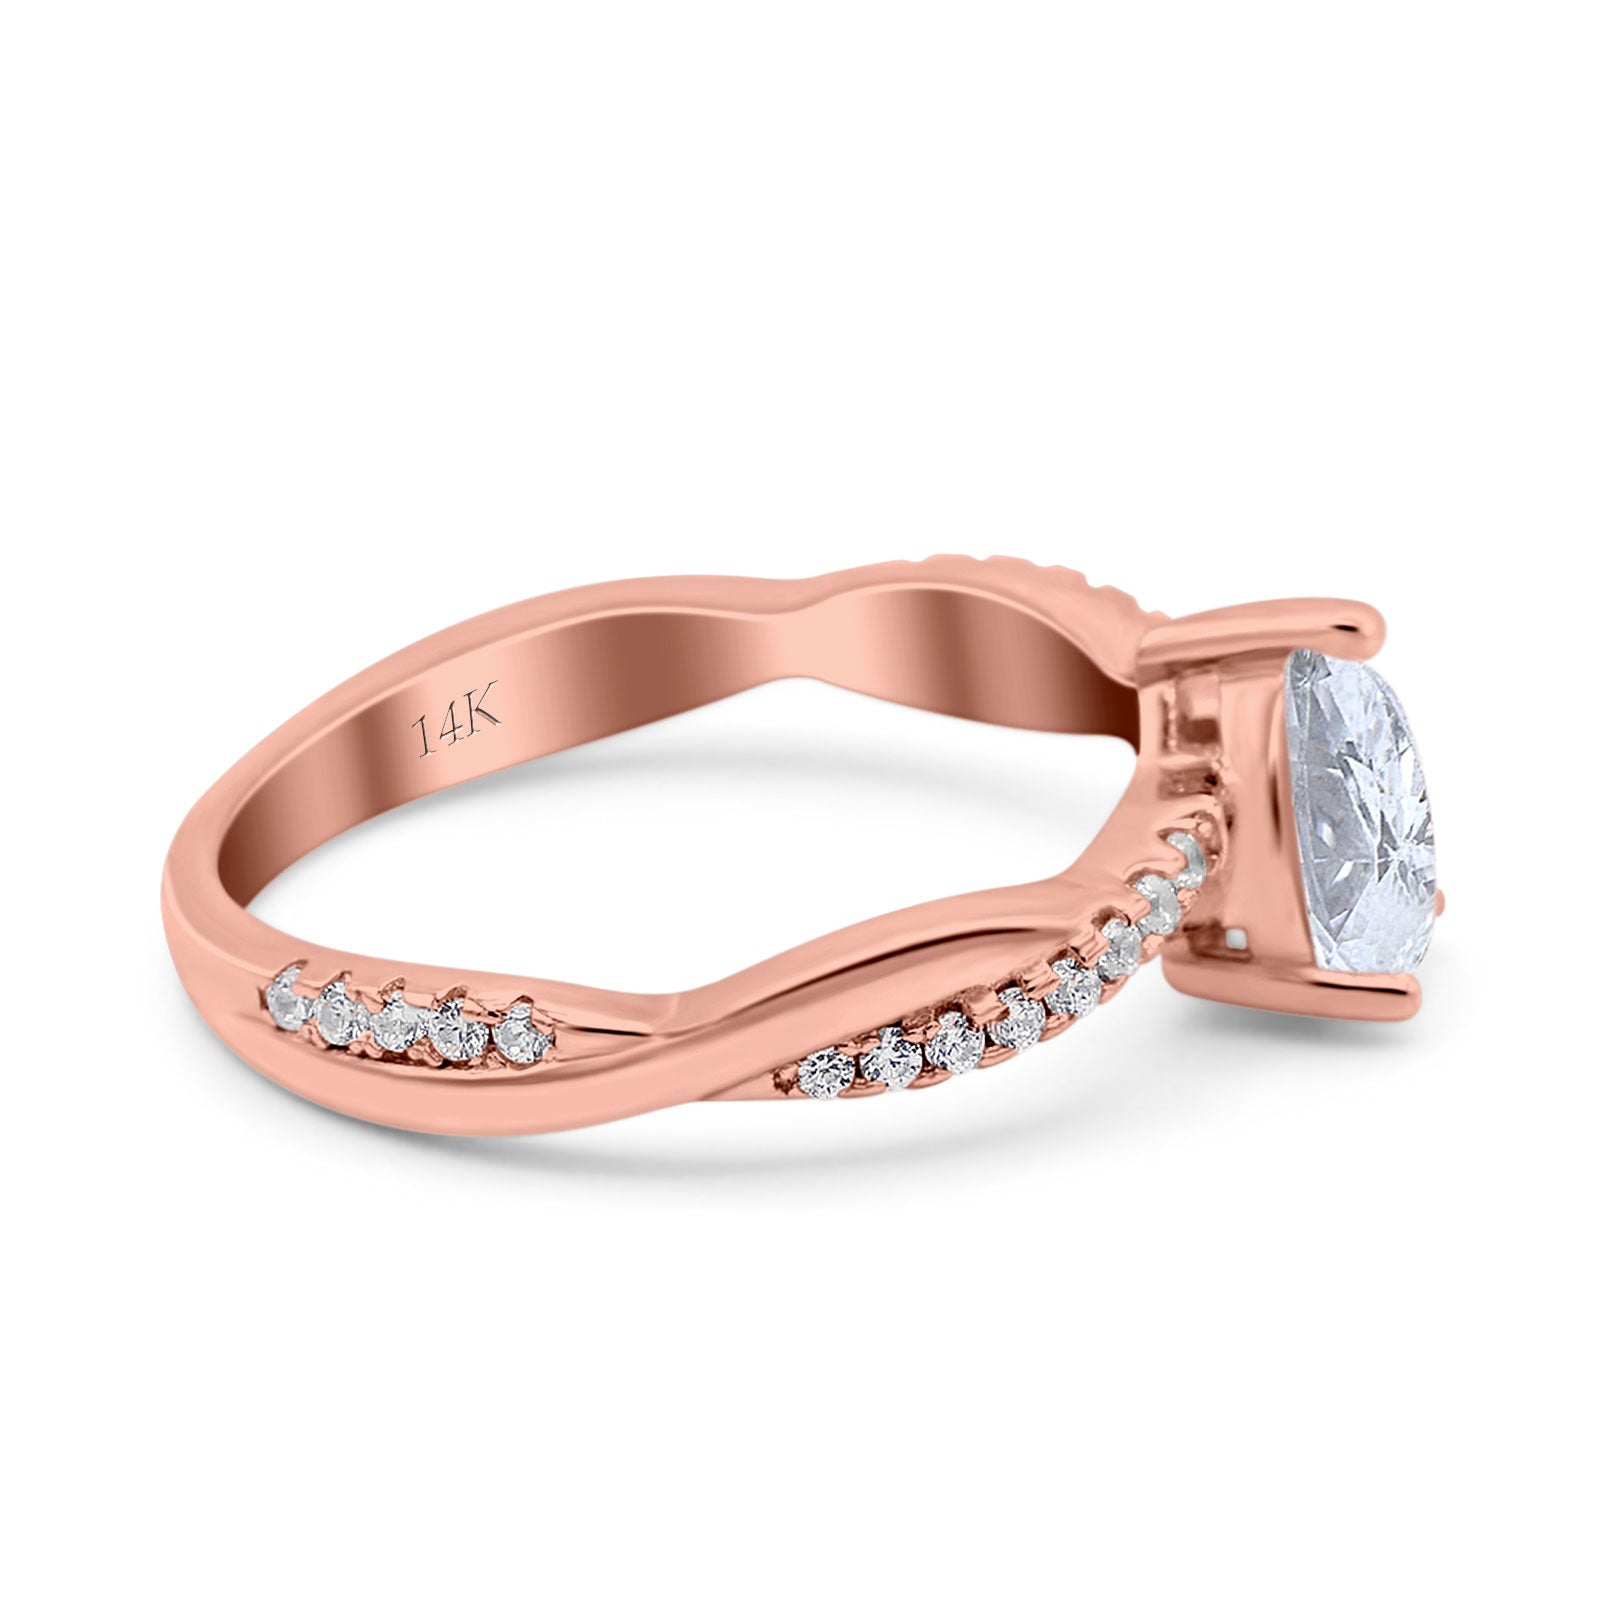 14K Gold Art Deco Pear Shape Twisted Bridal Simulated CZ Wedding Engagement Ring